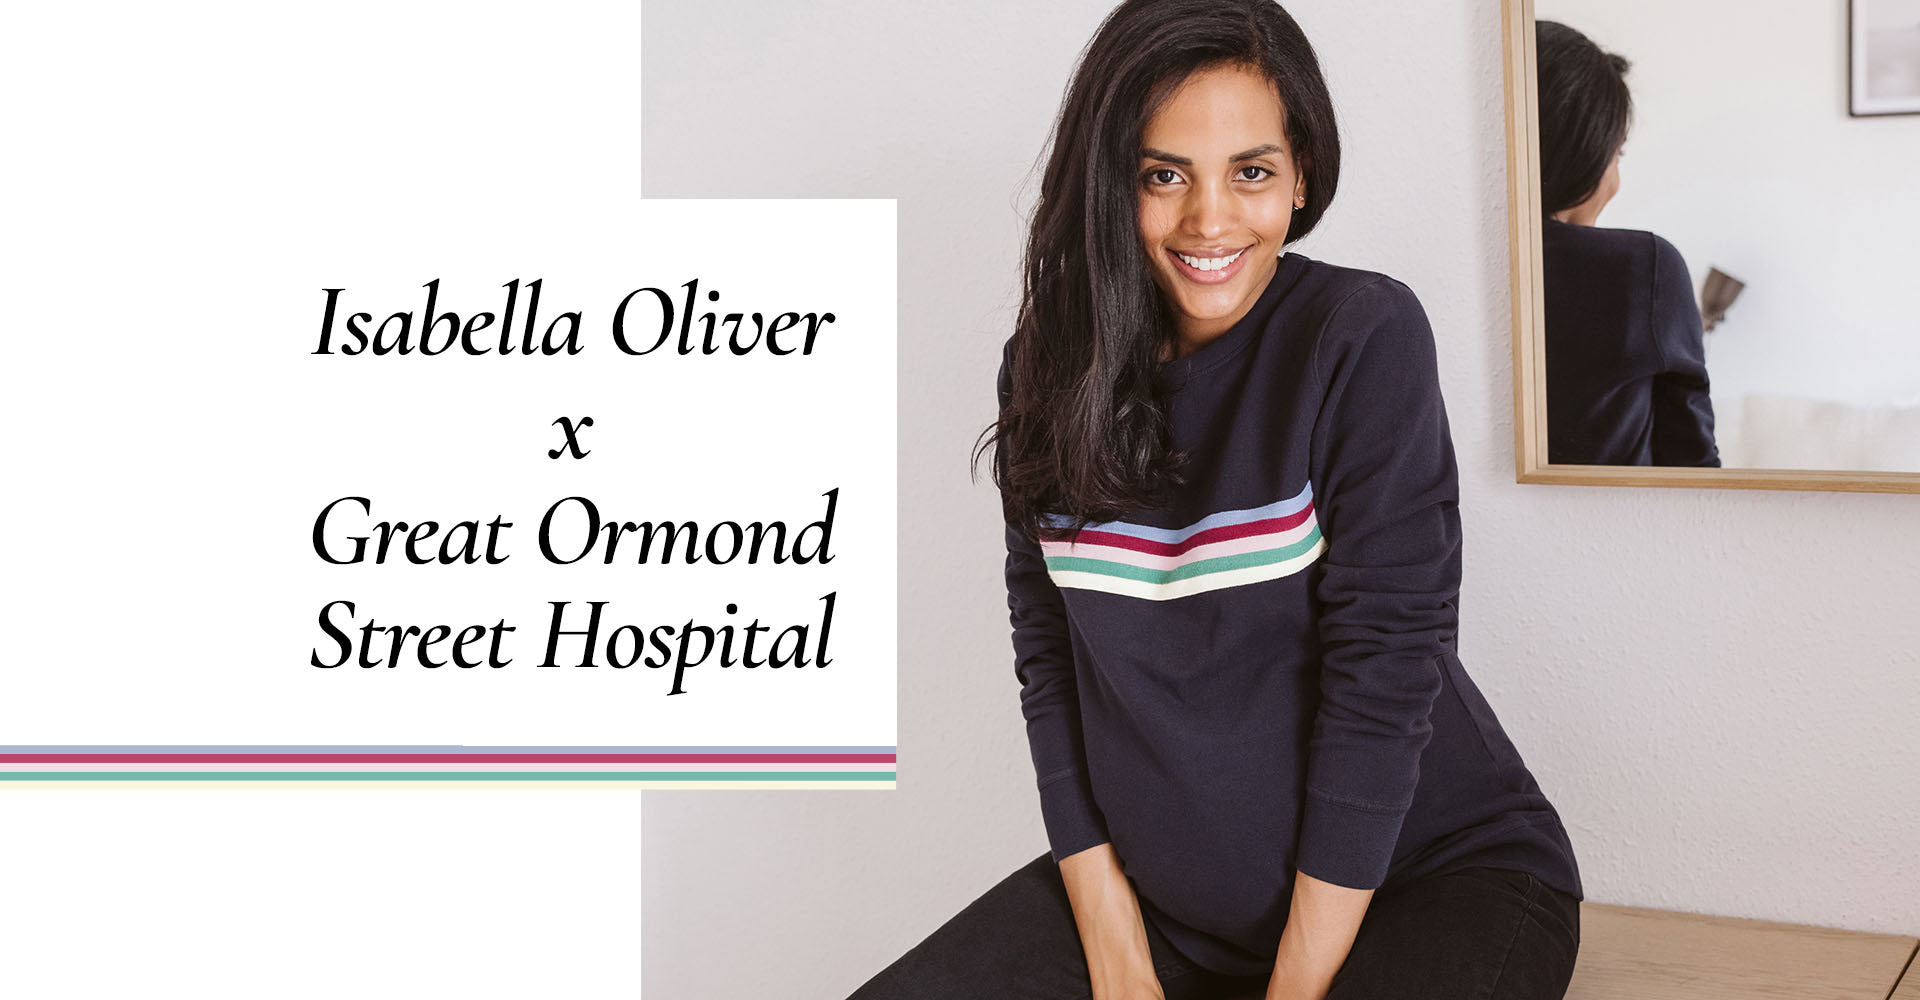 Isabella Oliver x Great Ormond Street Hospital